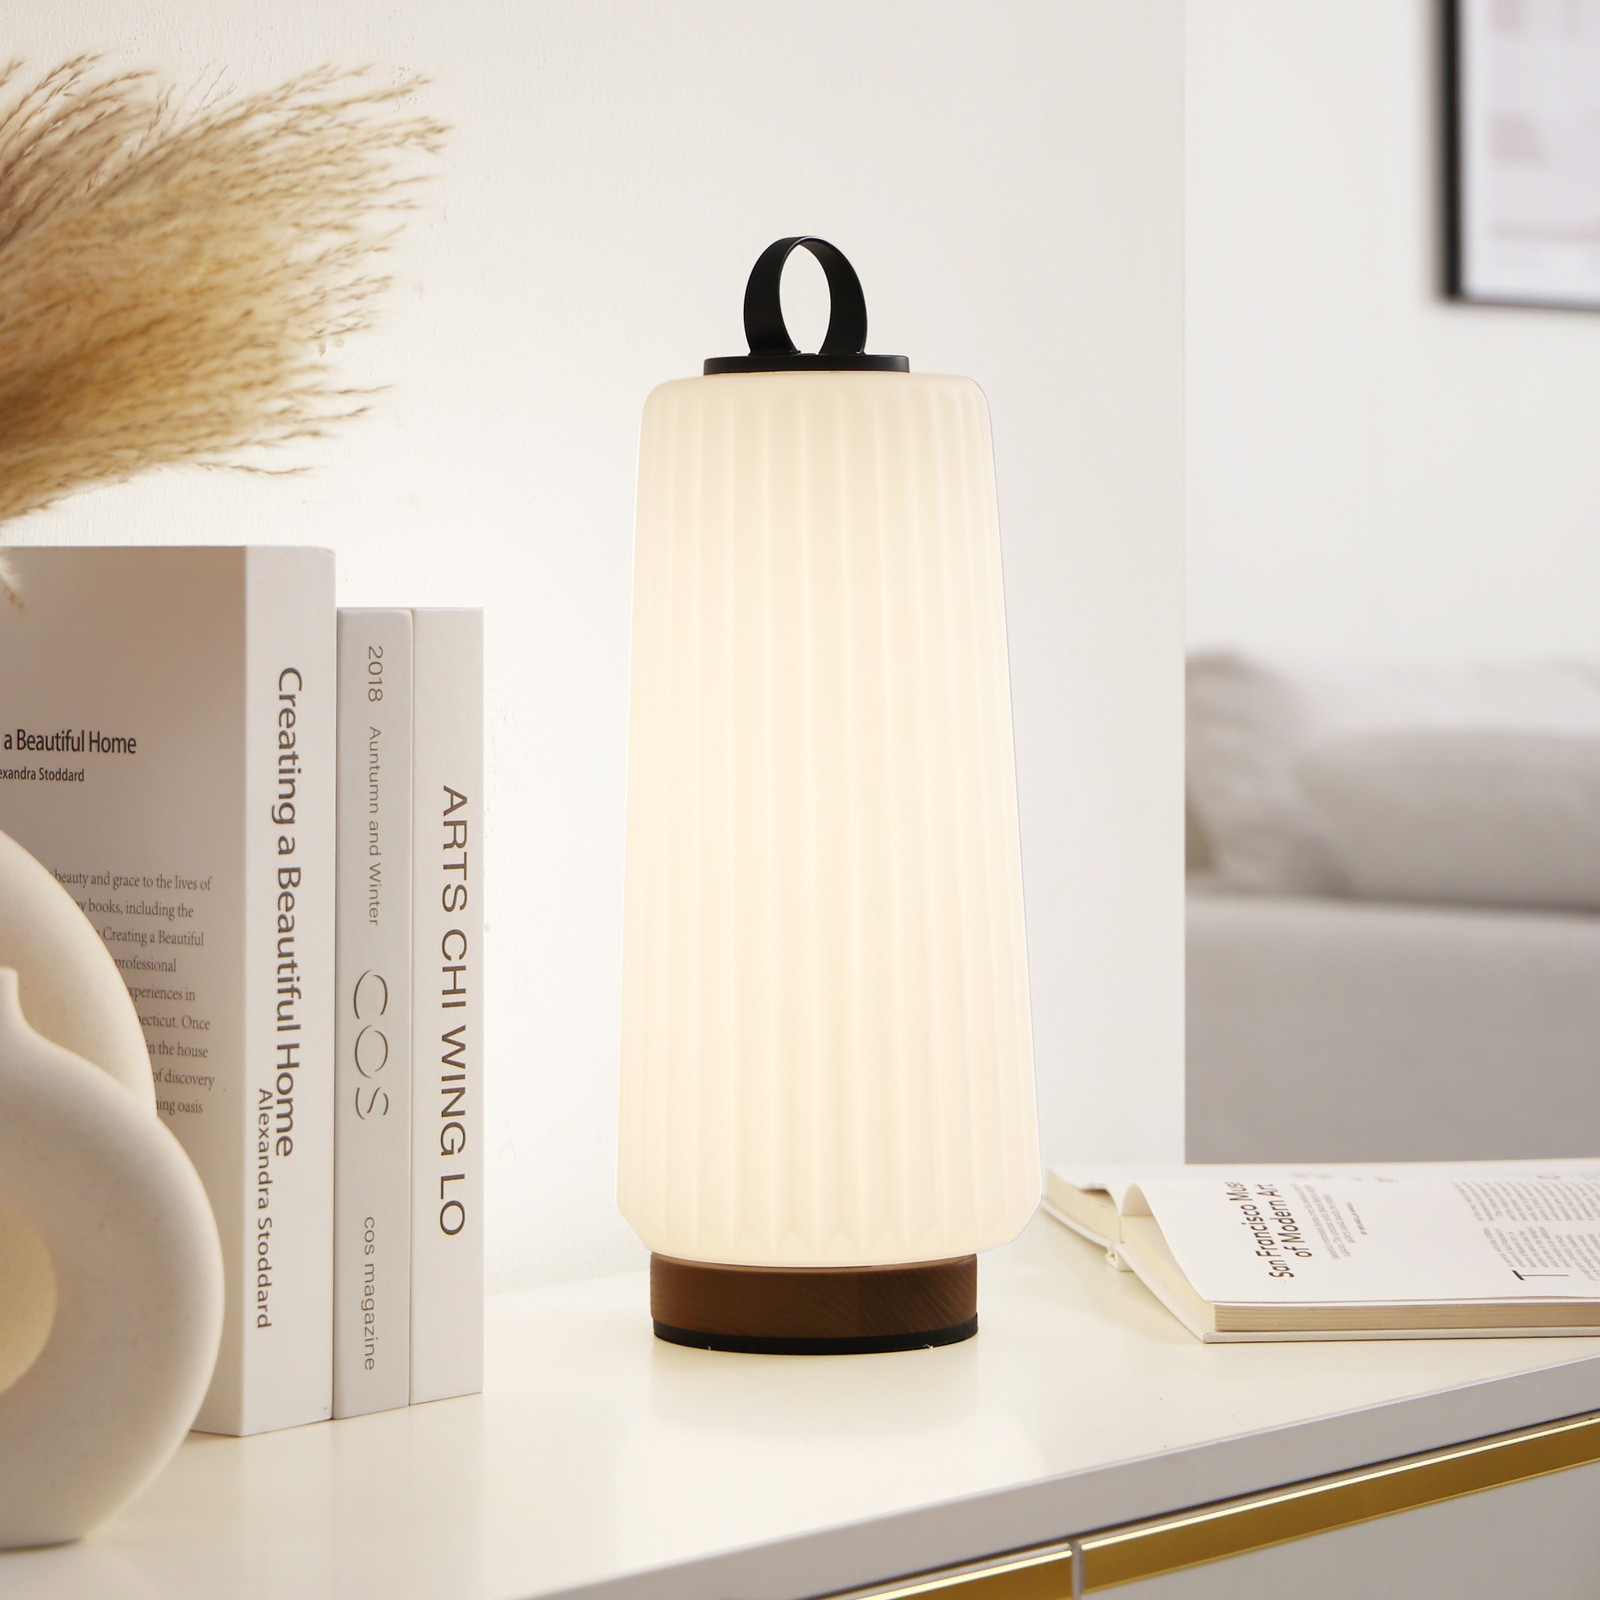 Lucande Liepa lampe de table LED, dimmable